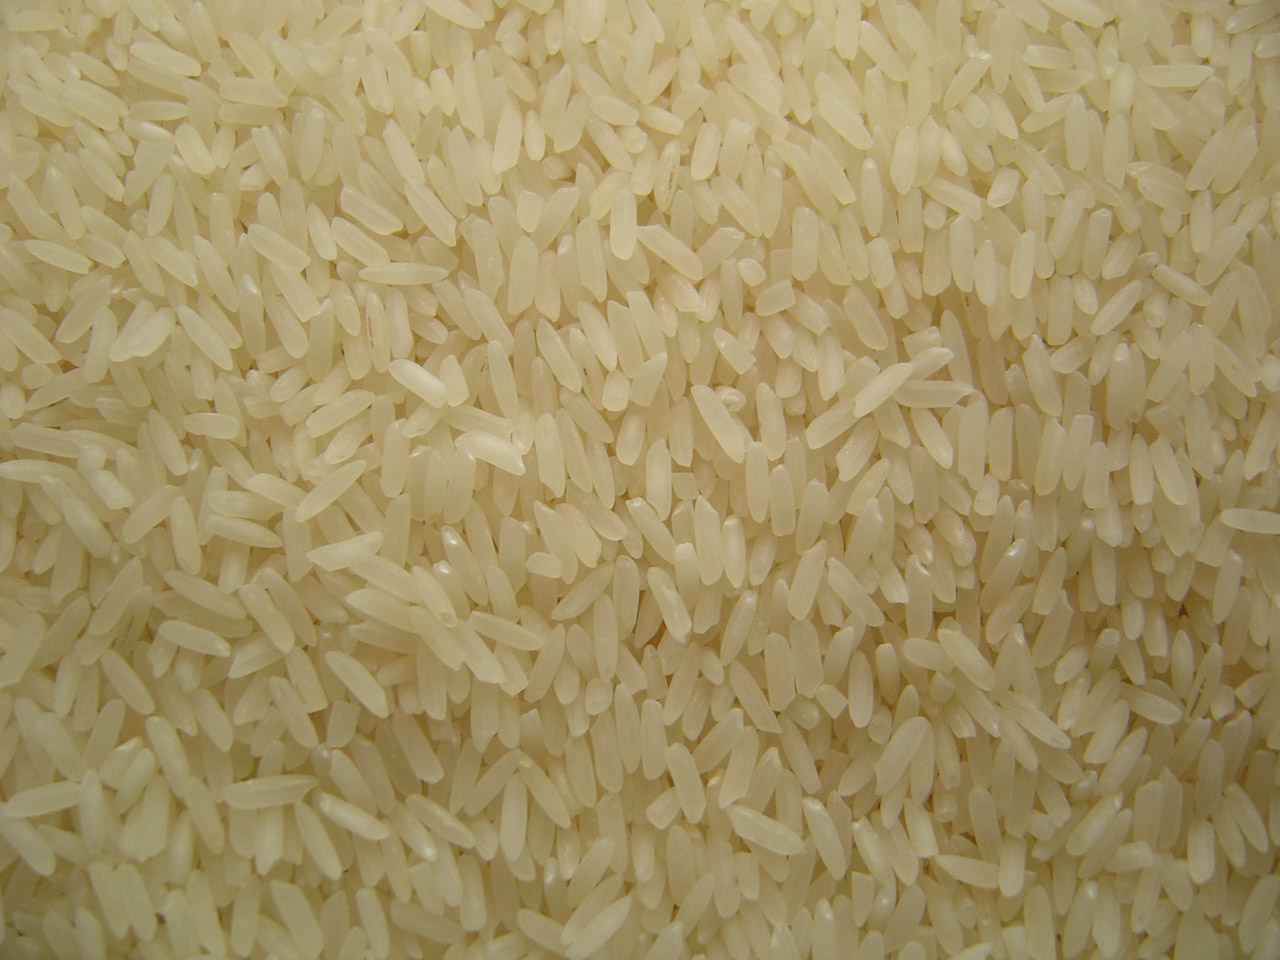 white rice grains free photo